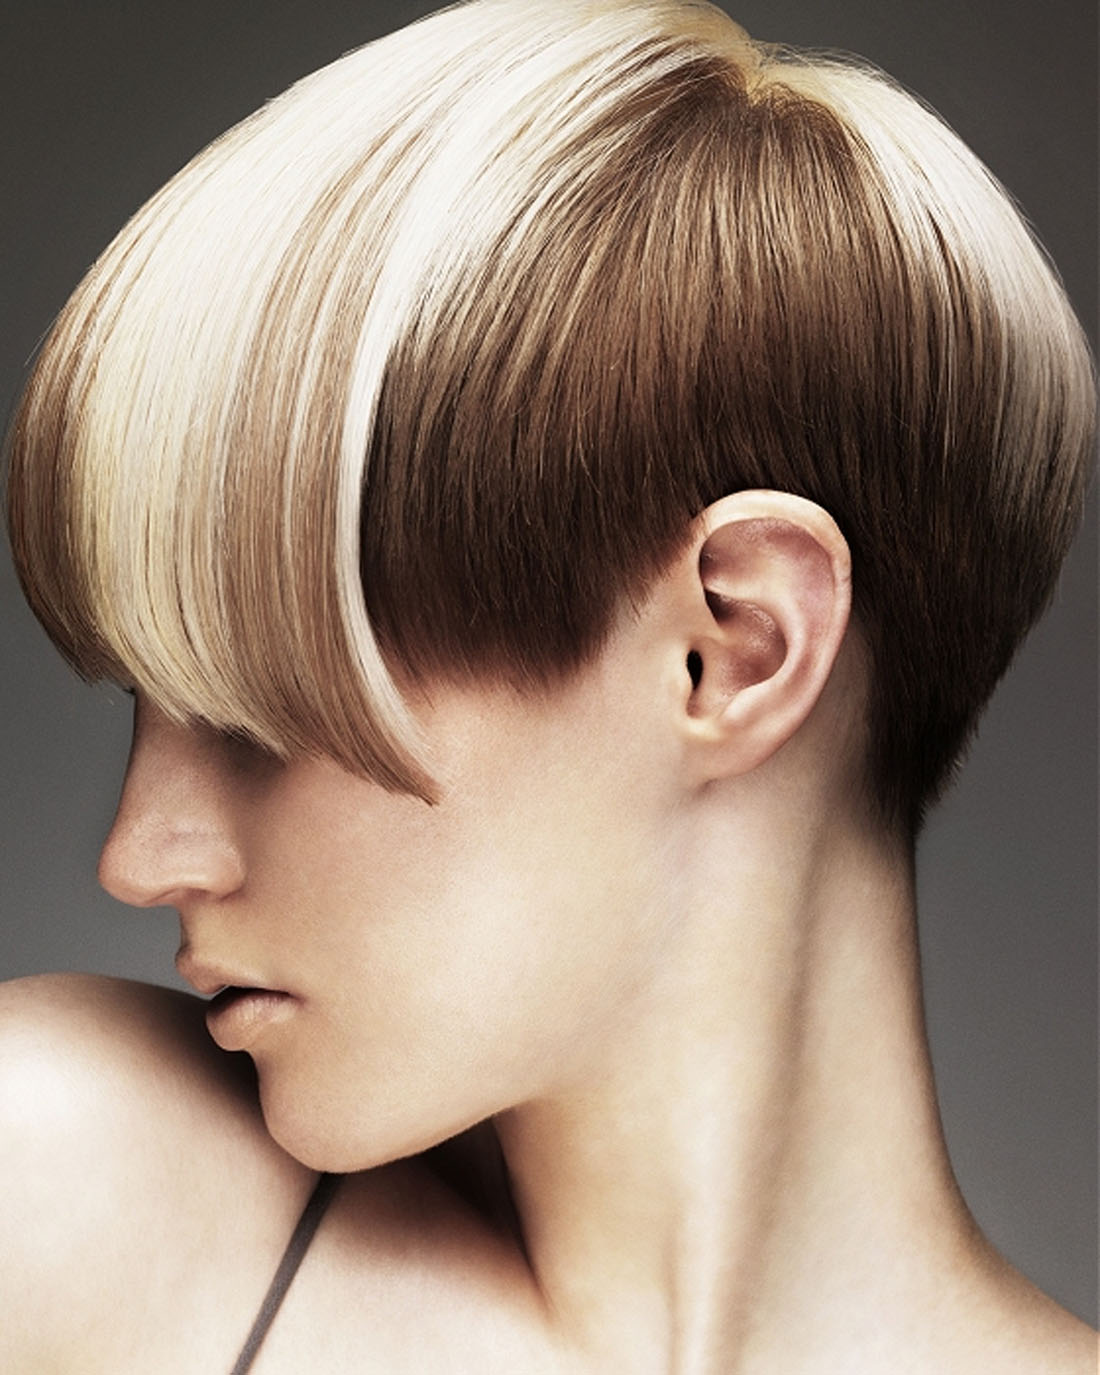 Hair-Color-Trend-of-Blonde-Hair-Short-Haircuts-with-Long-Bangs.jpg